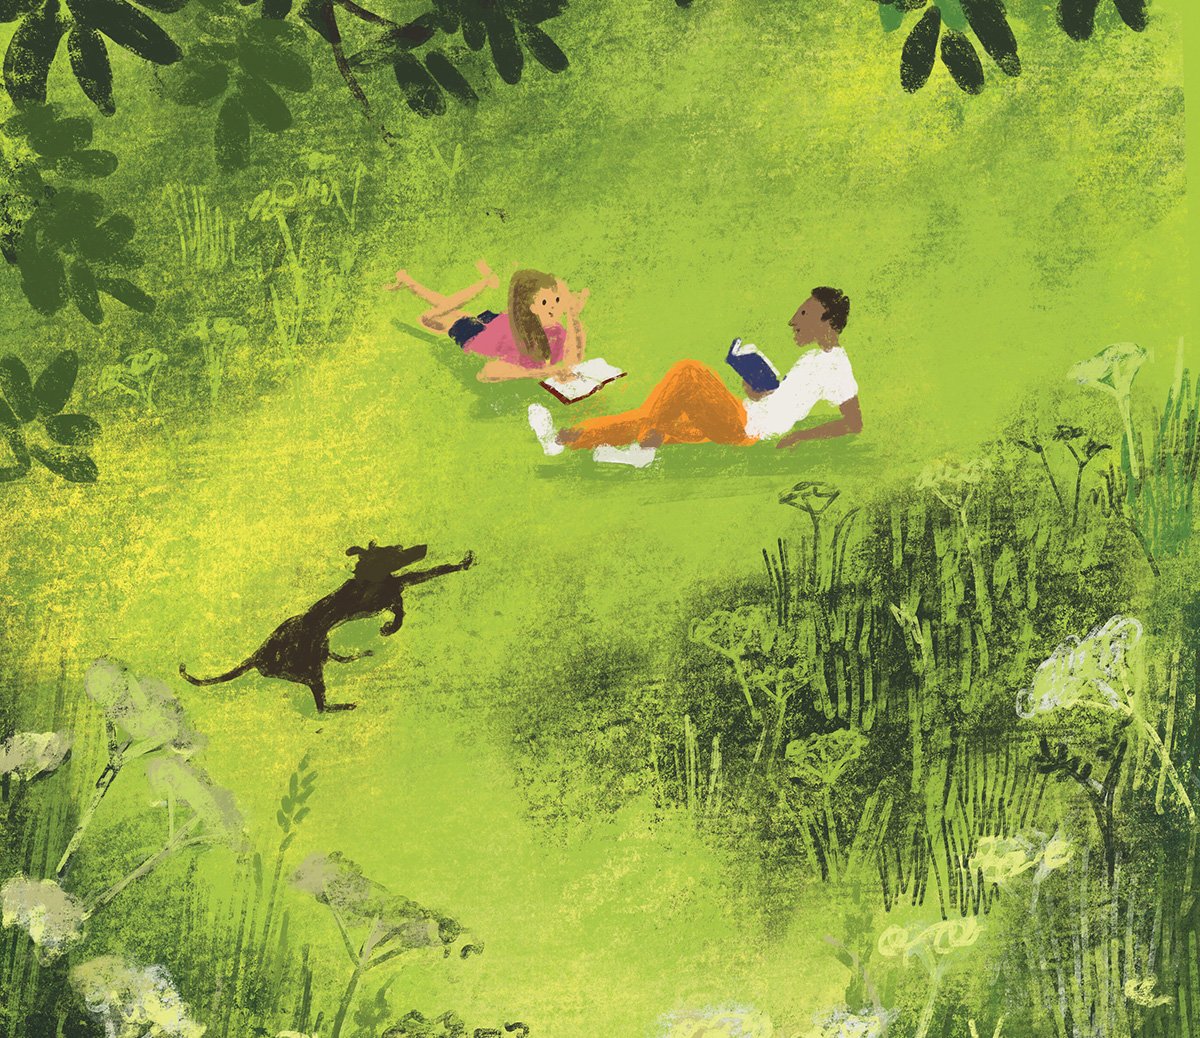 jenny-bloomfield-reading-on-the-grass-illustration.jpg